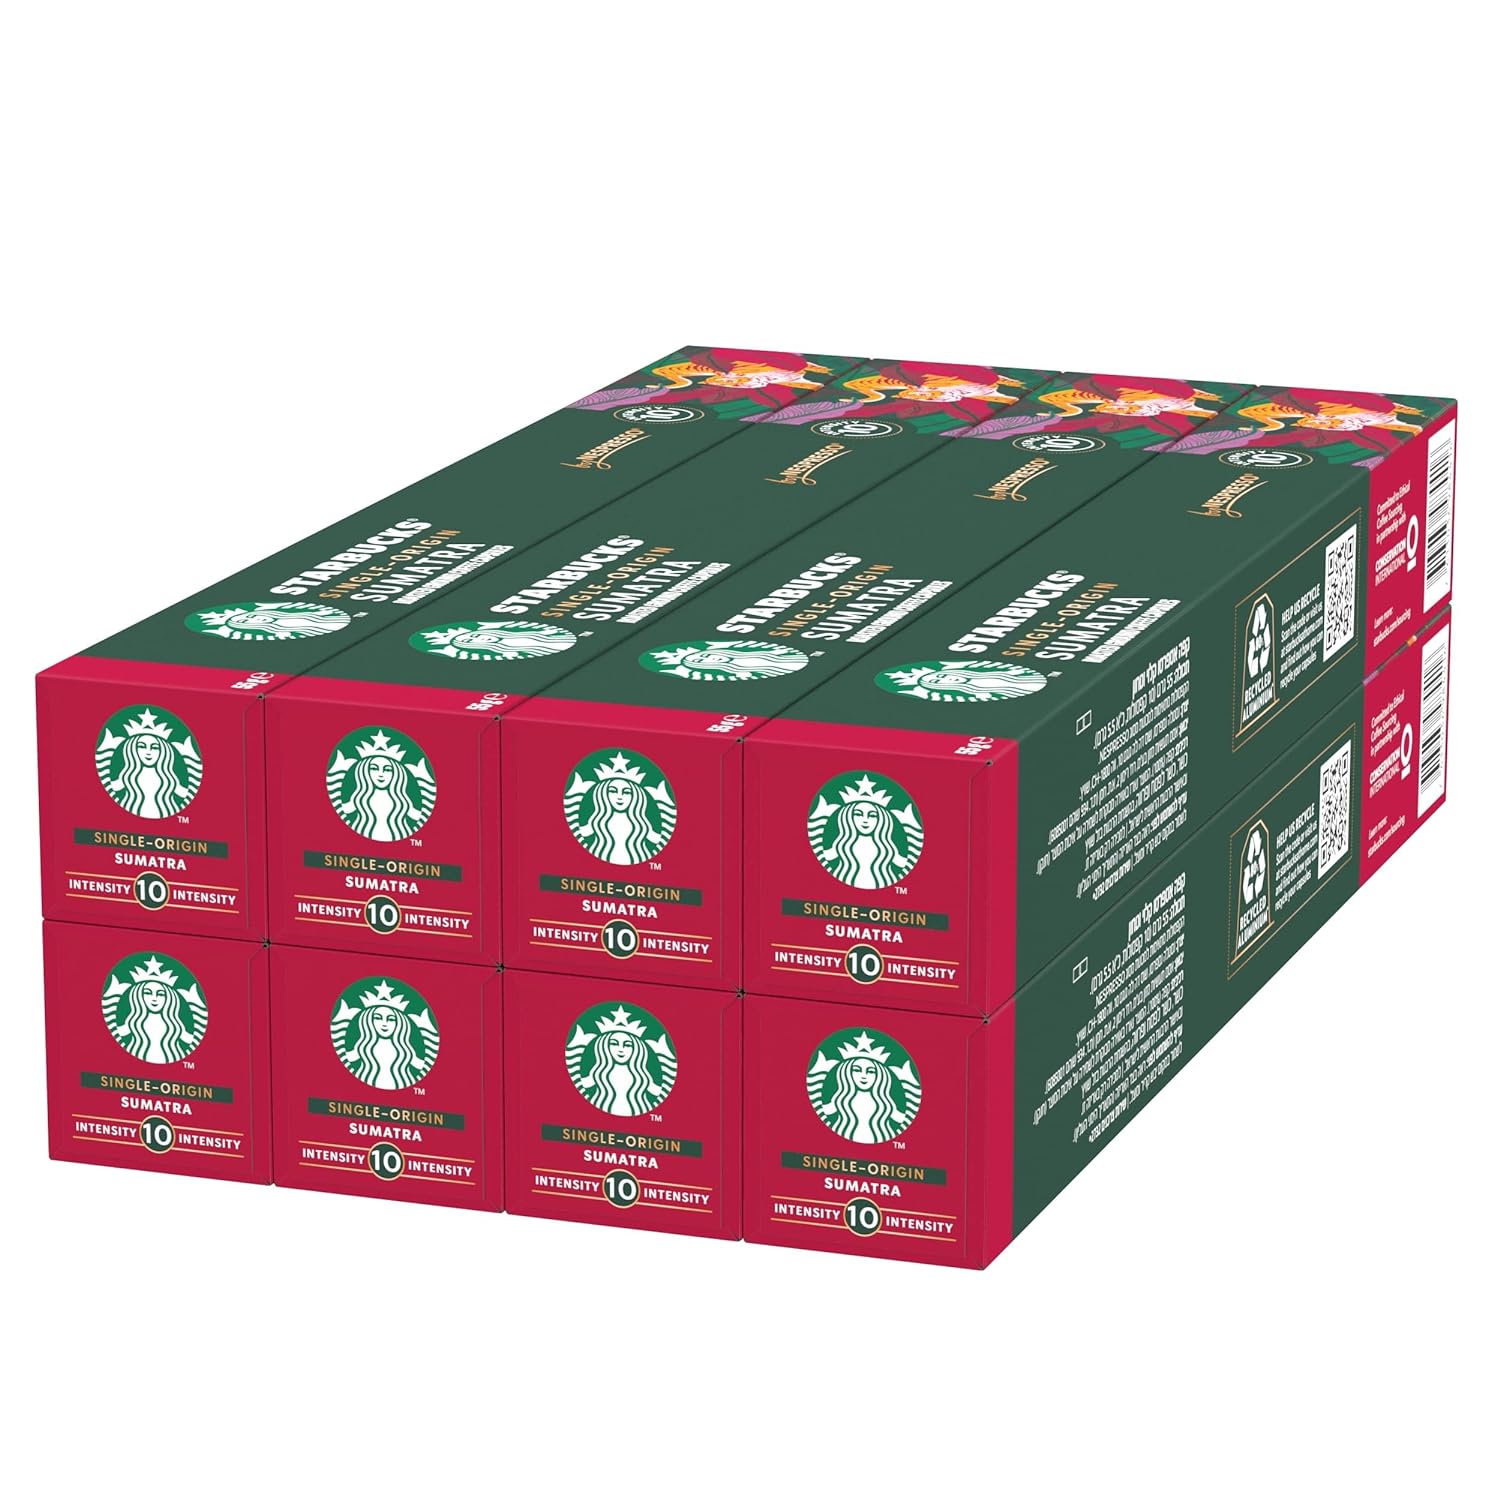 STARBUCKS Single-Origin Sumatra by Nespresso Dark Roast Coffee Capsules 8 x 10 (80 Capsules)